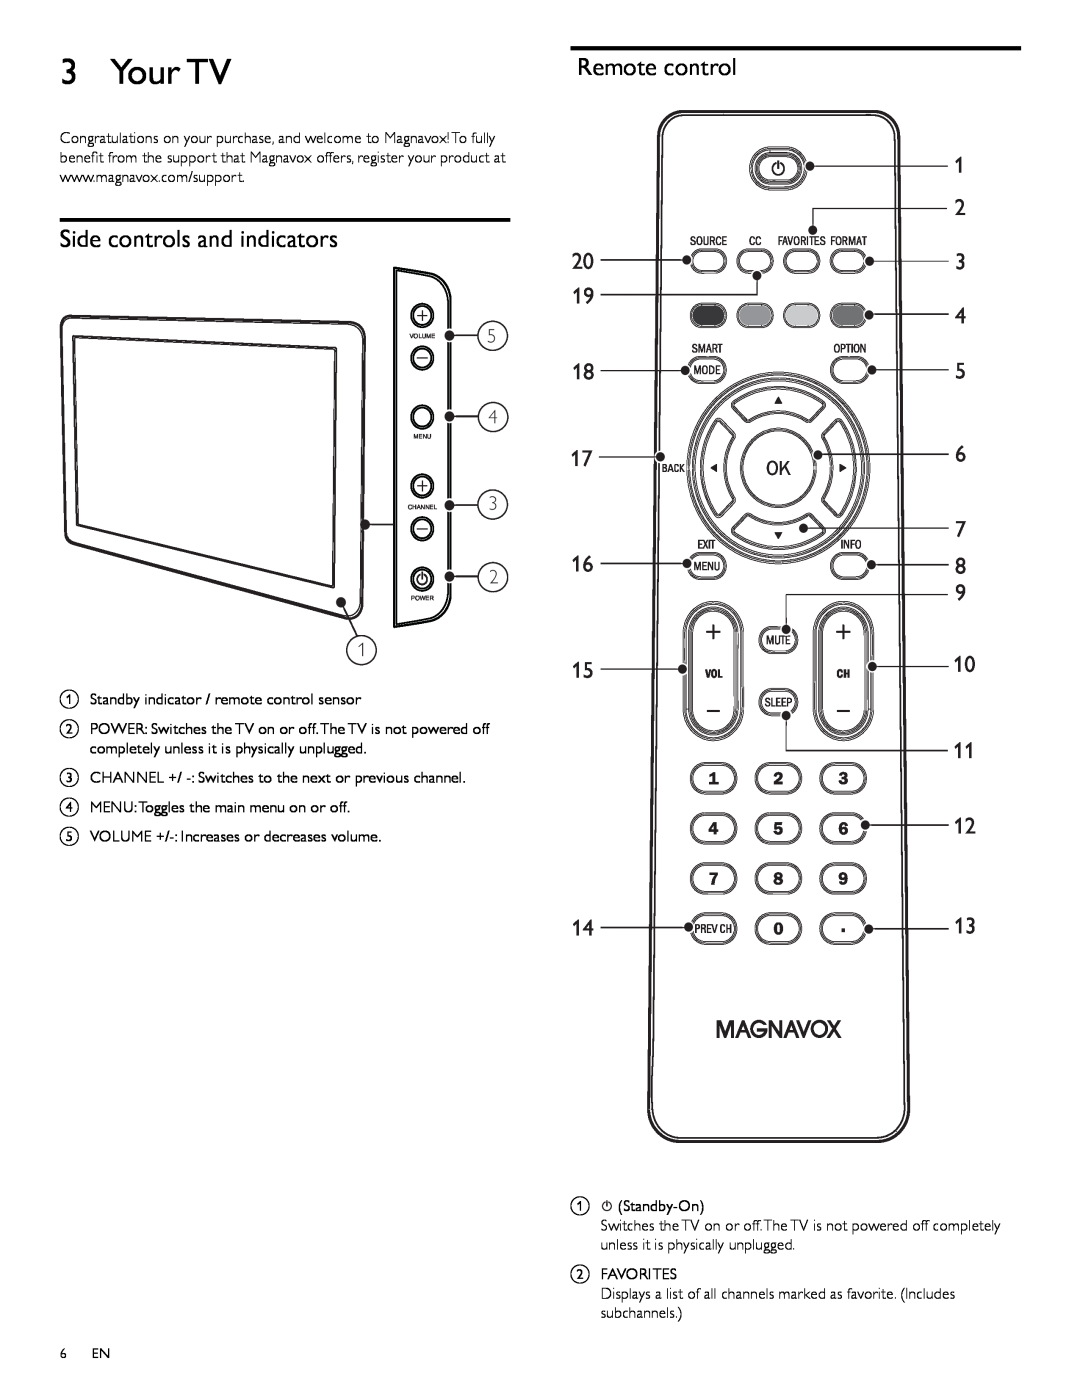 Magnavox 47MF439B user manual Your TV, Side controls and indicators, Remote control 